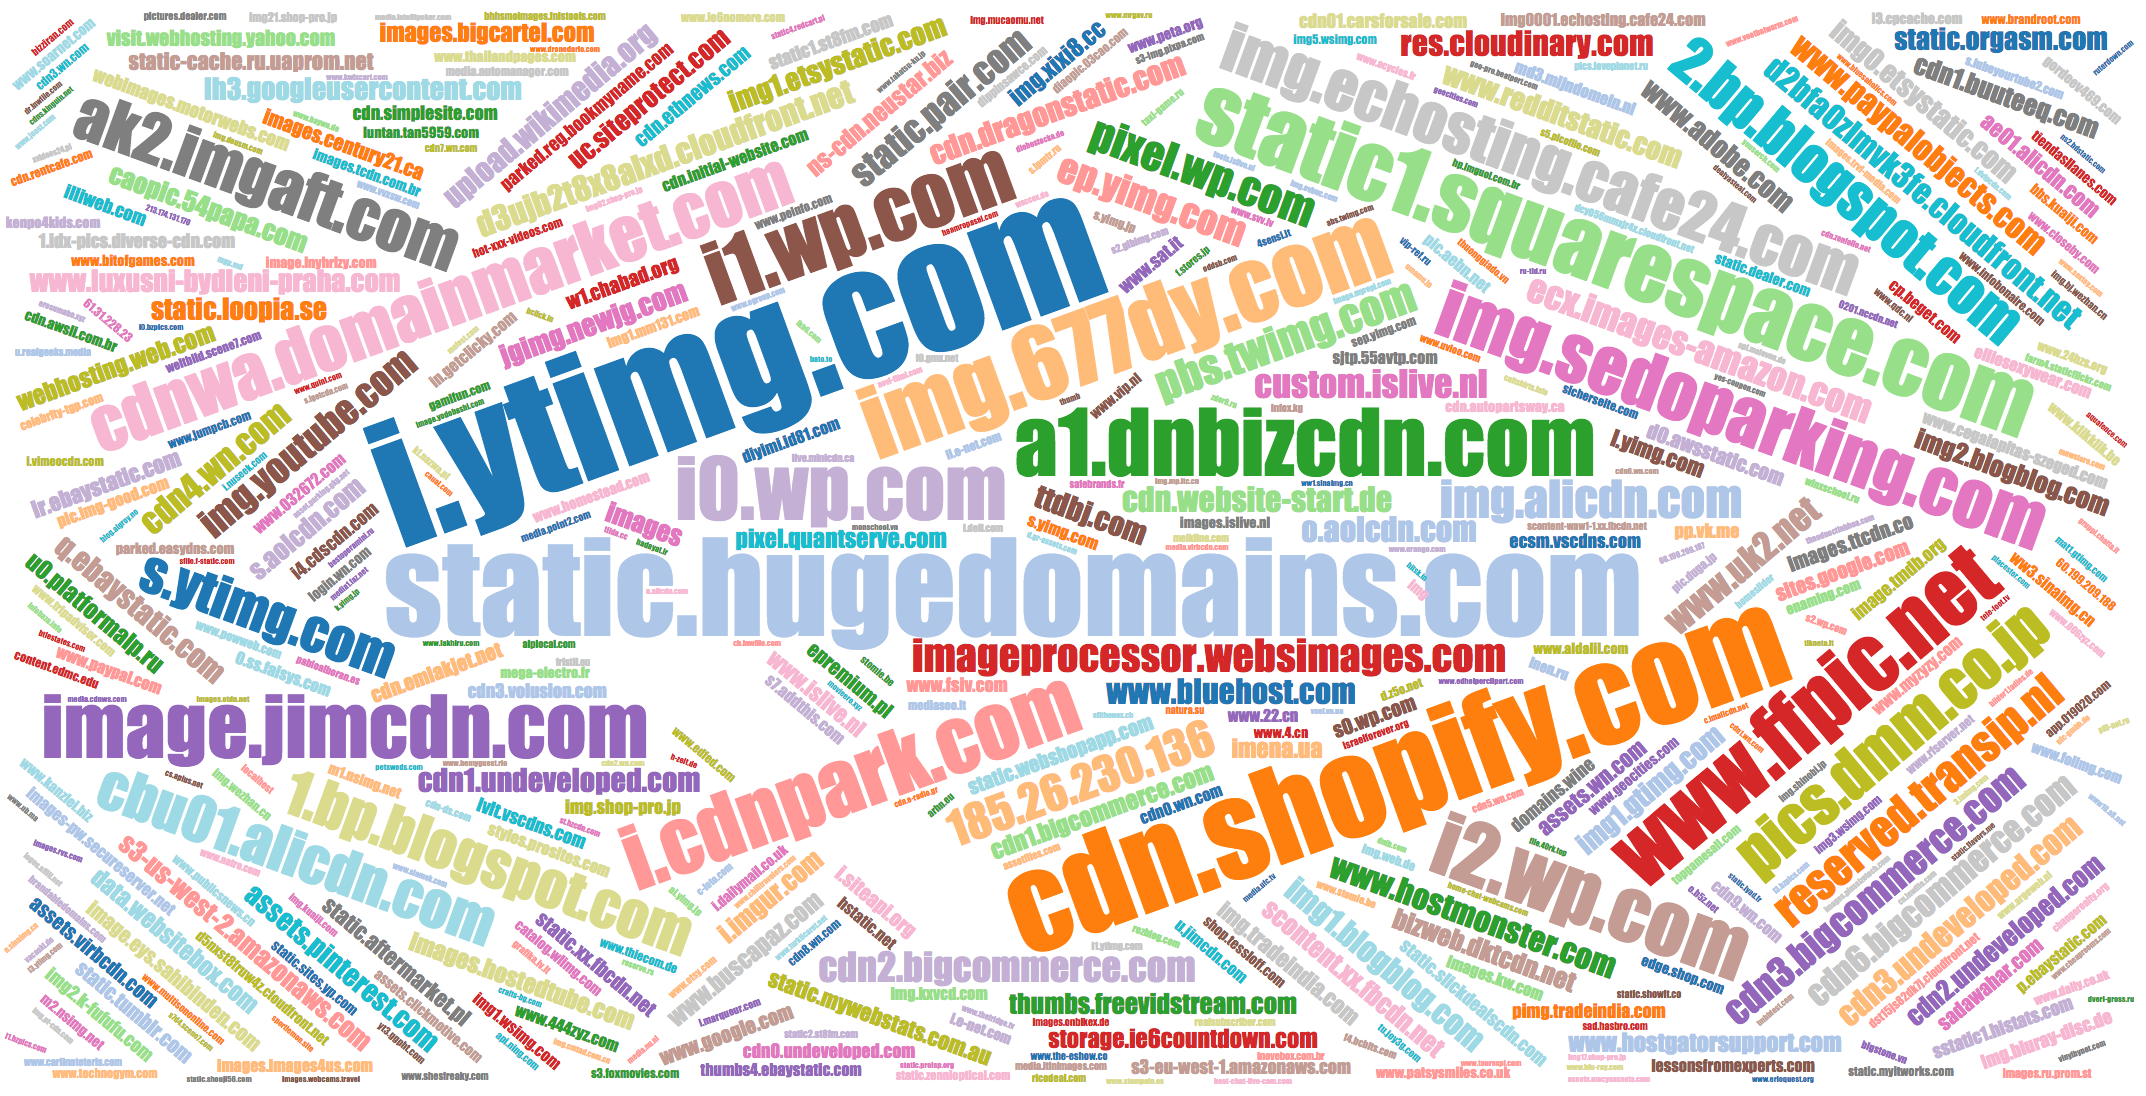 Popular names of IMG domains bizweb.dktcdn.net, brightmlsimages.fnistools.com, etc.